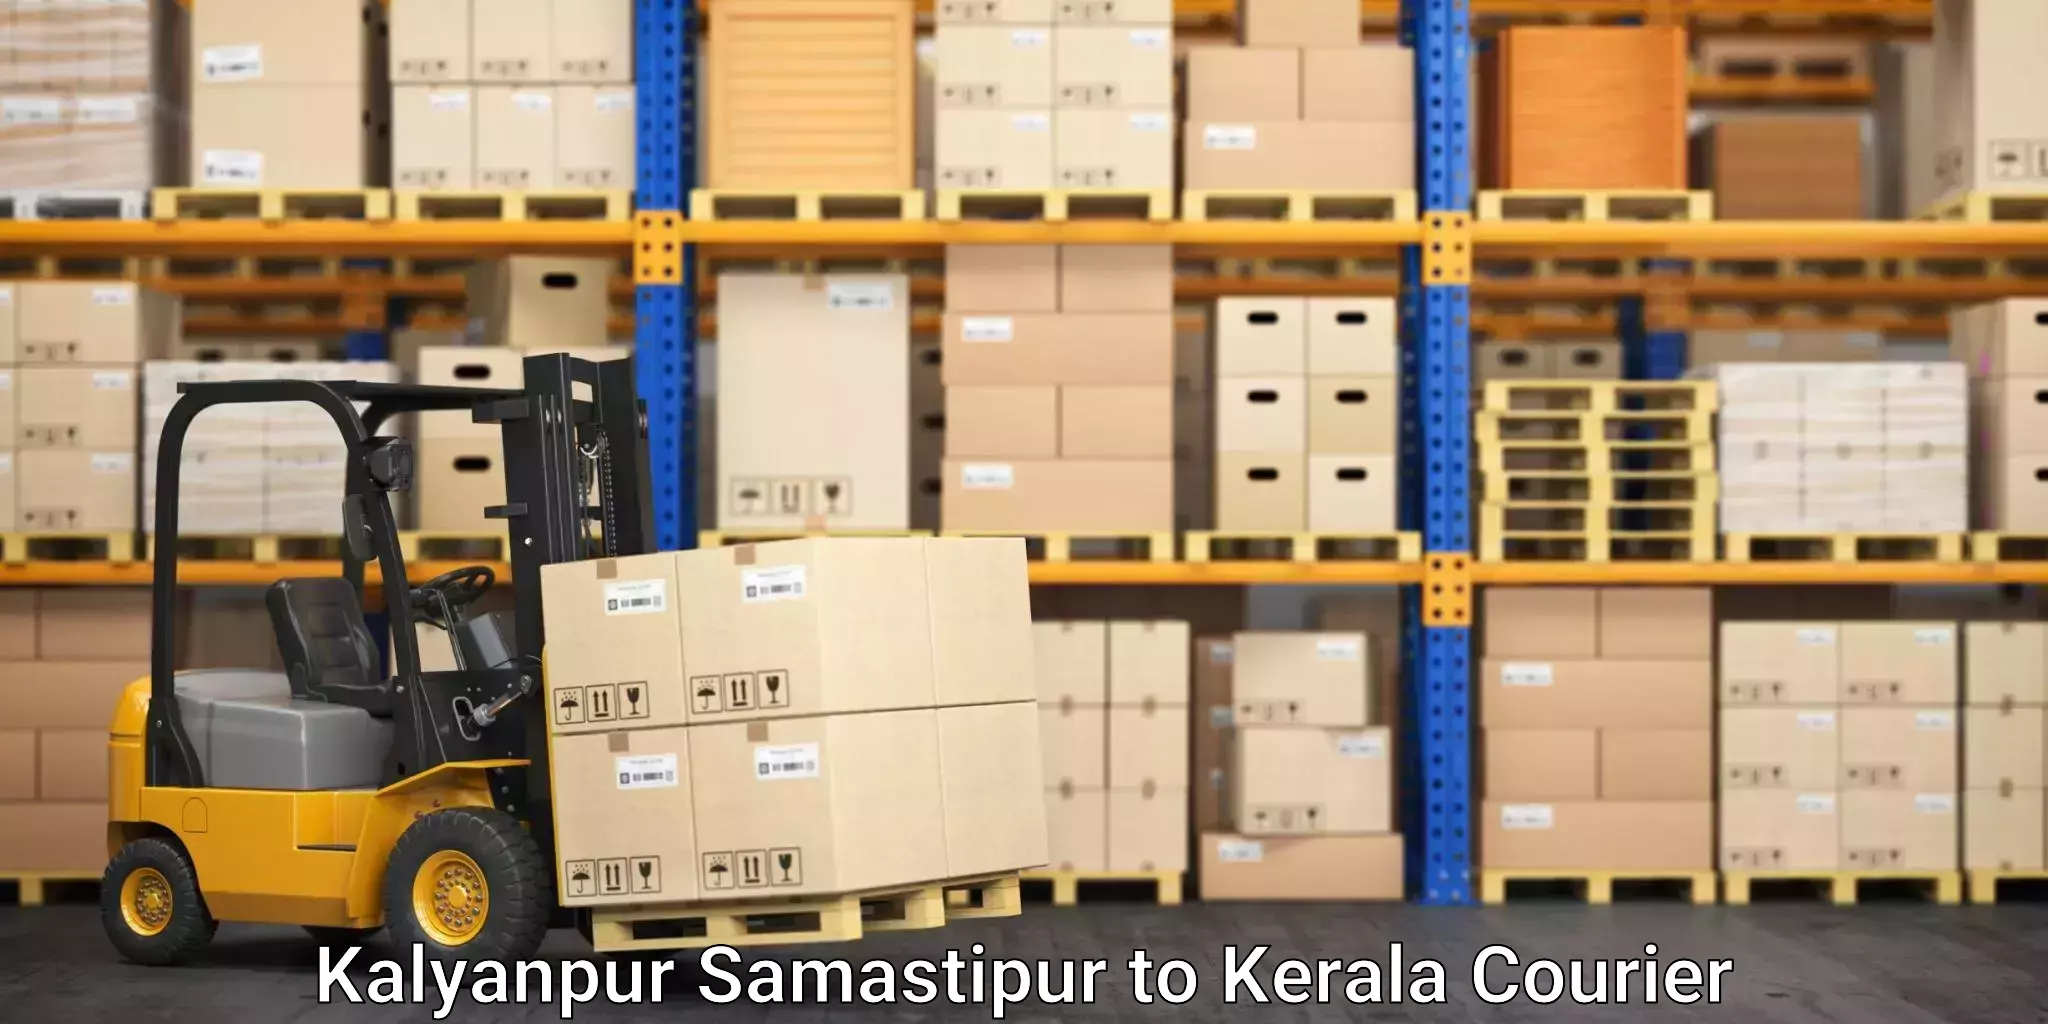 Efficient moving company Kalyanpur Samastipur to Alakode